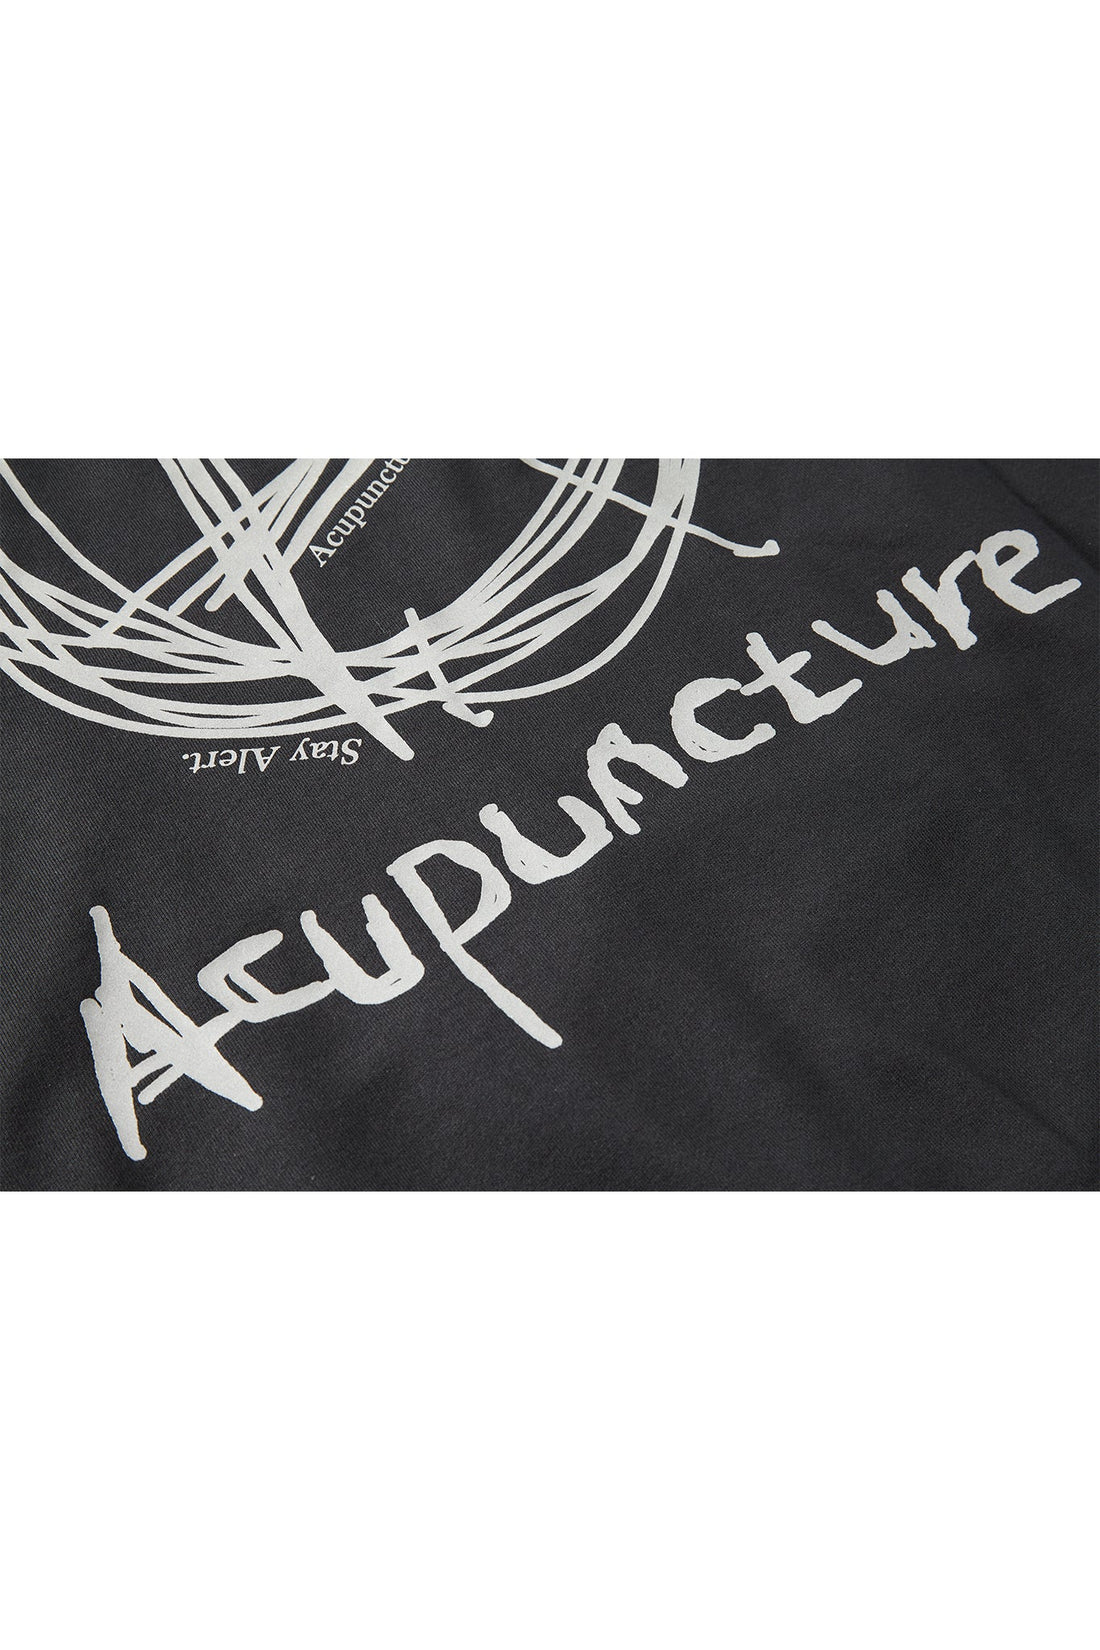 A HOODIE BLACK Acupuncture